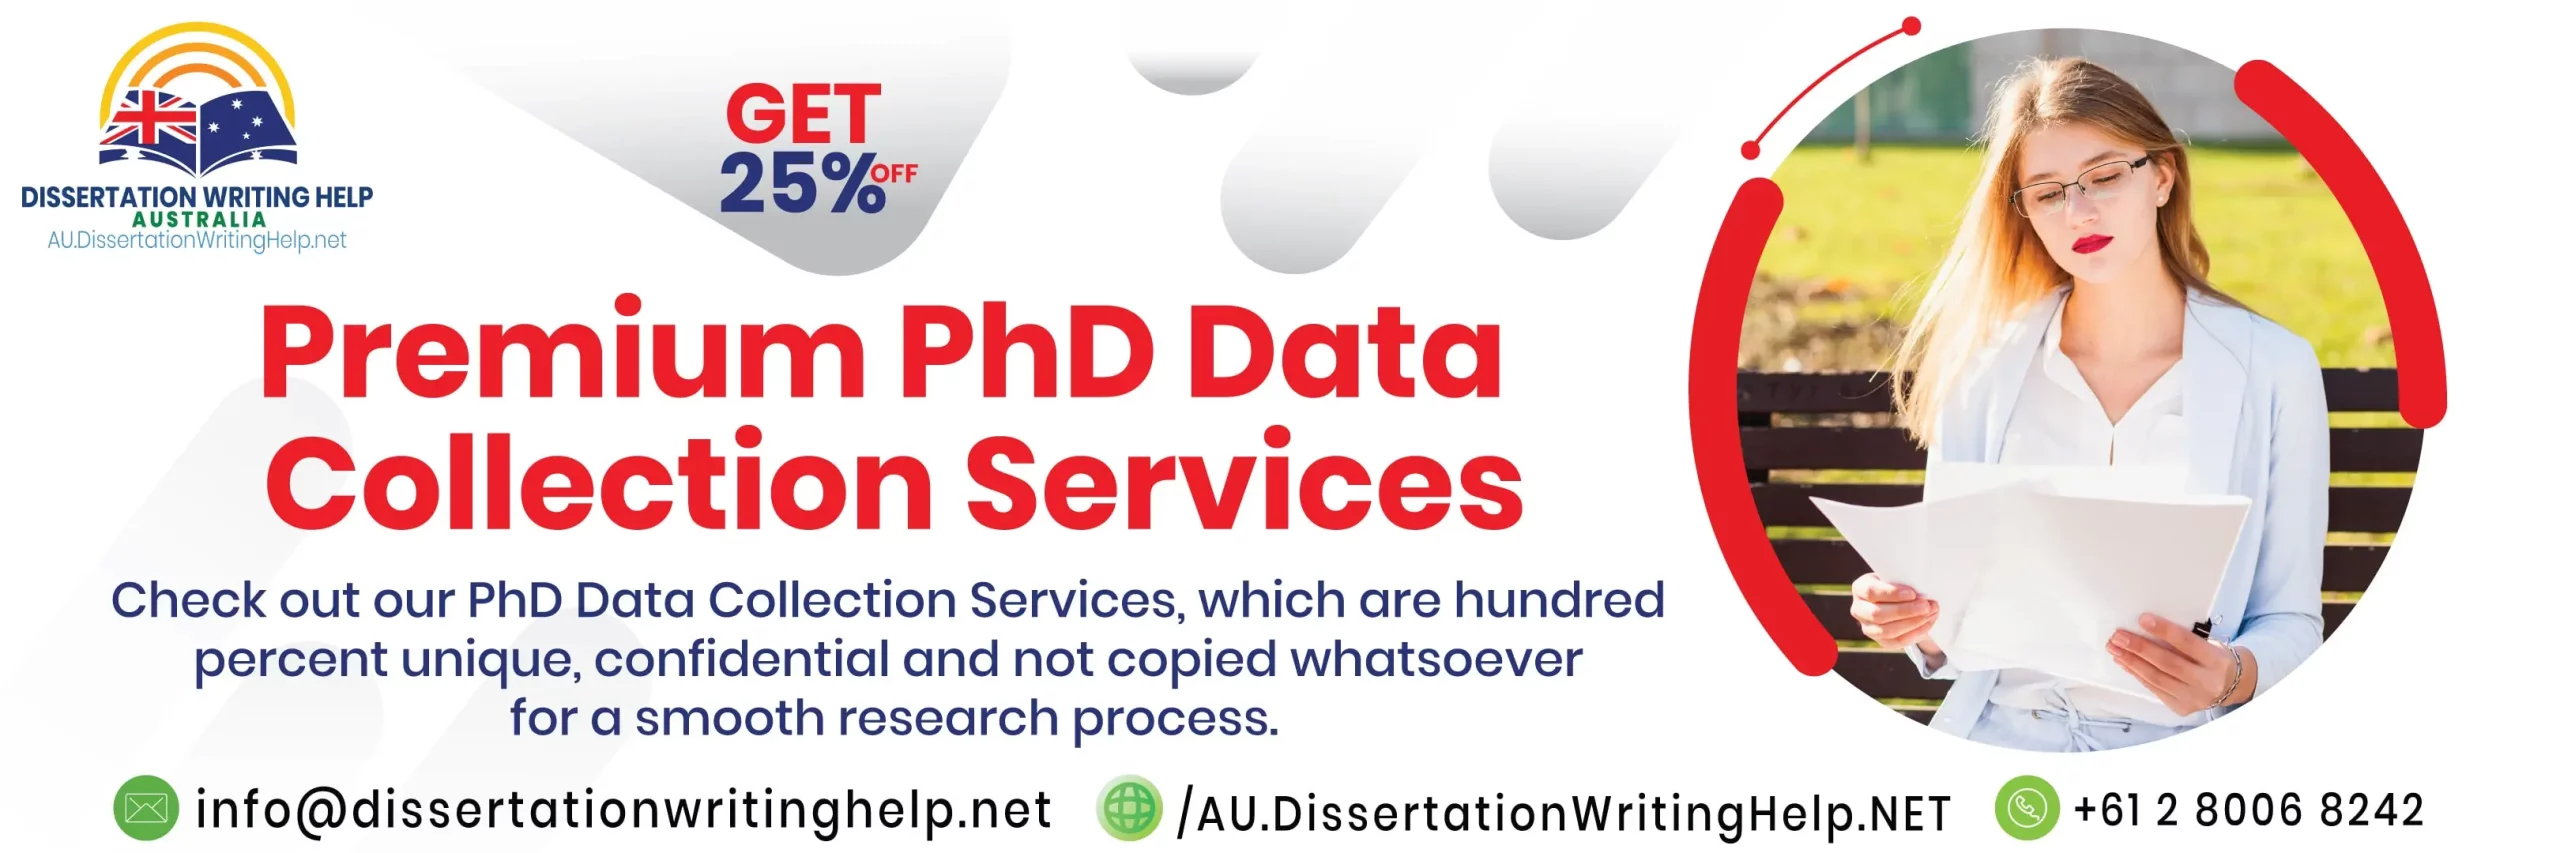 Premium PhD Data Collection Services